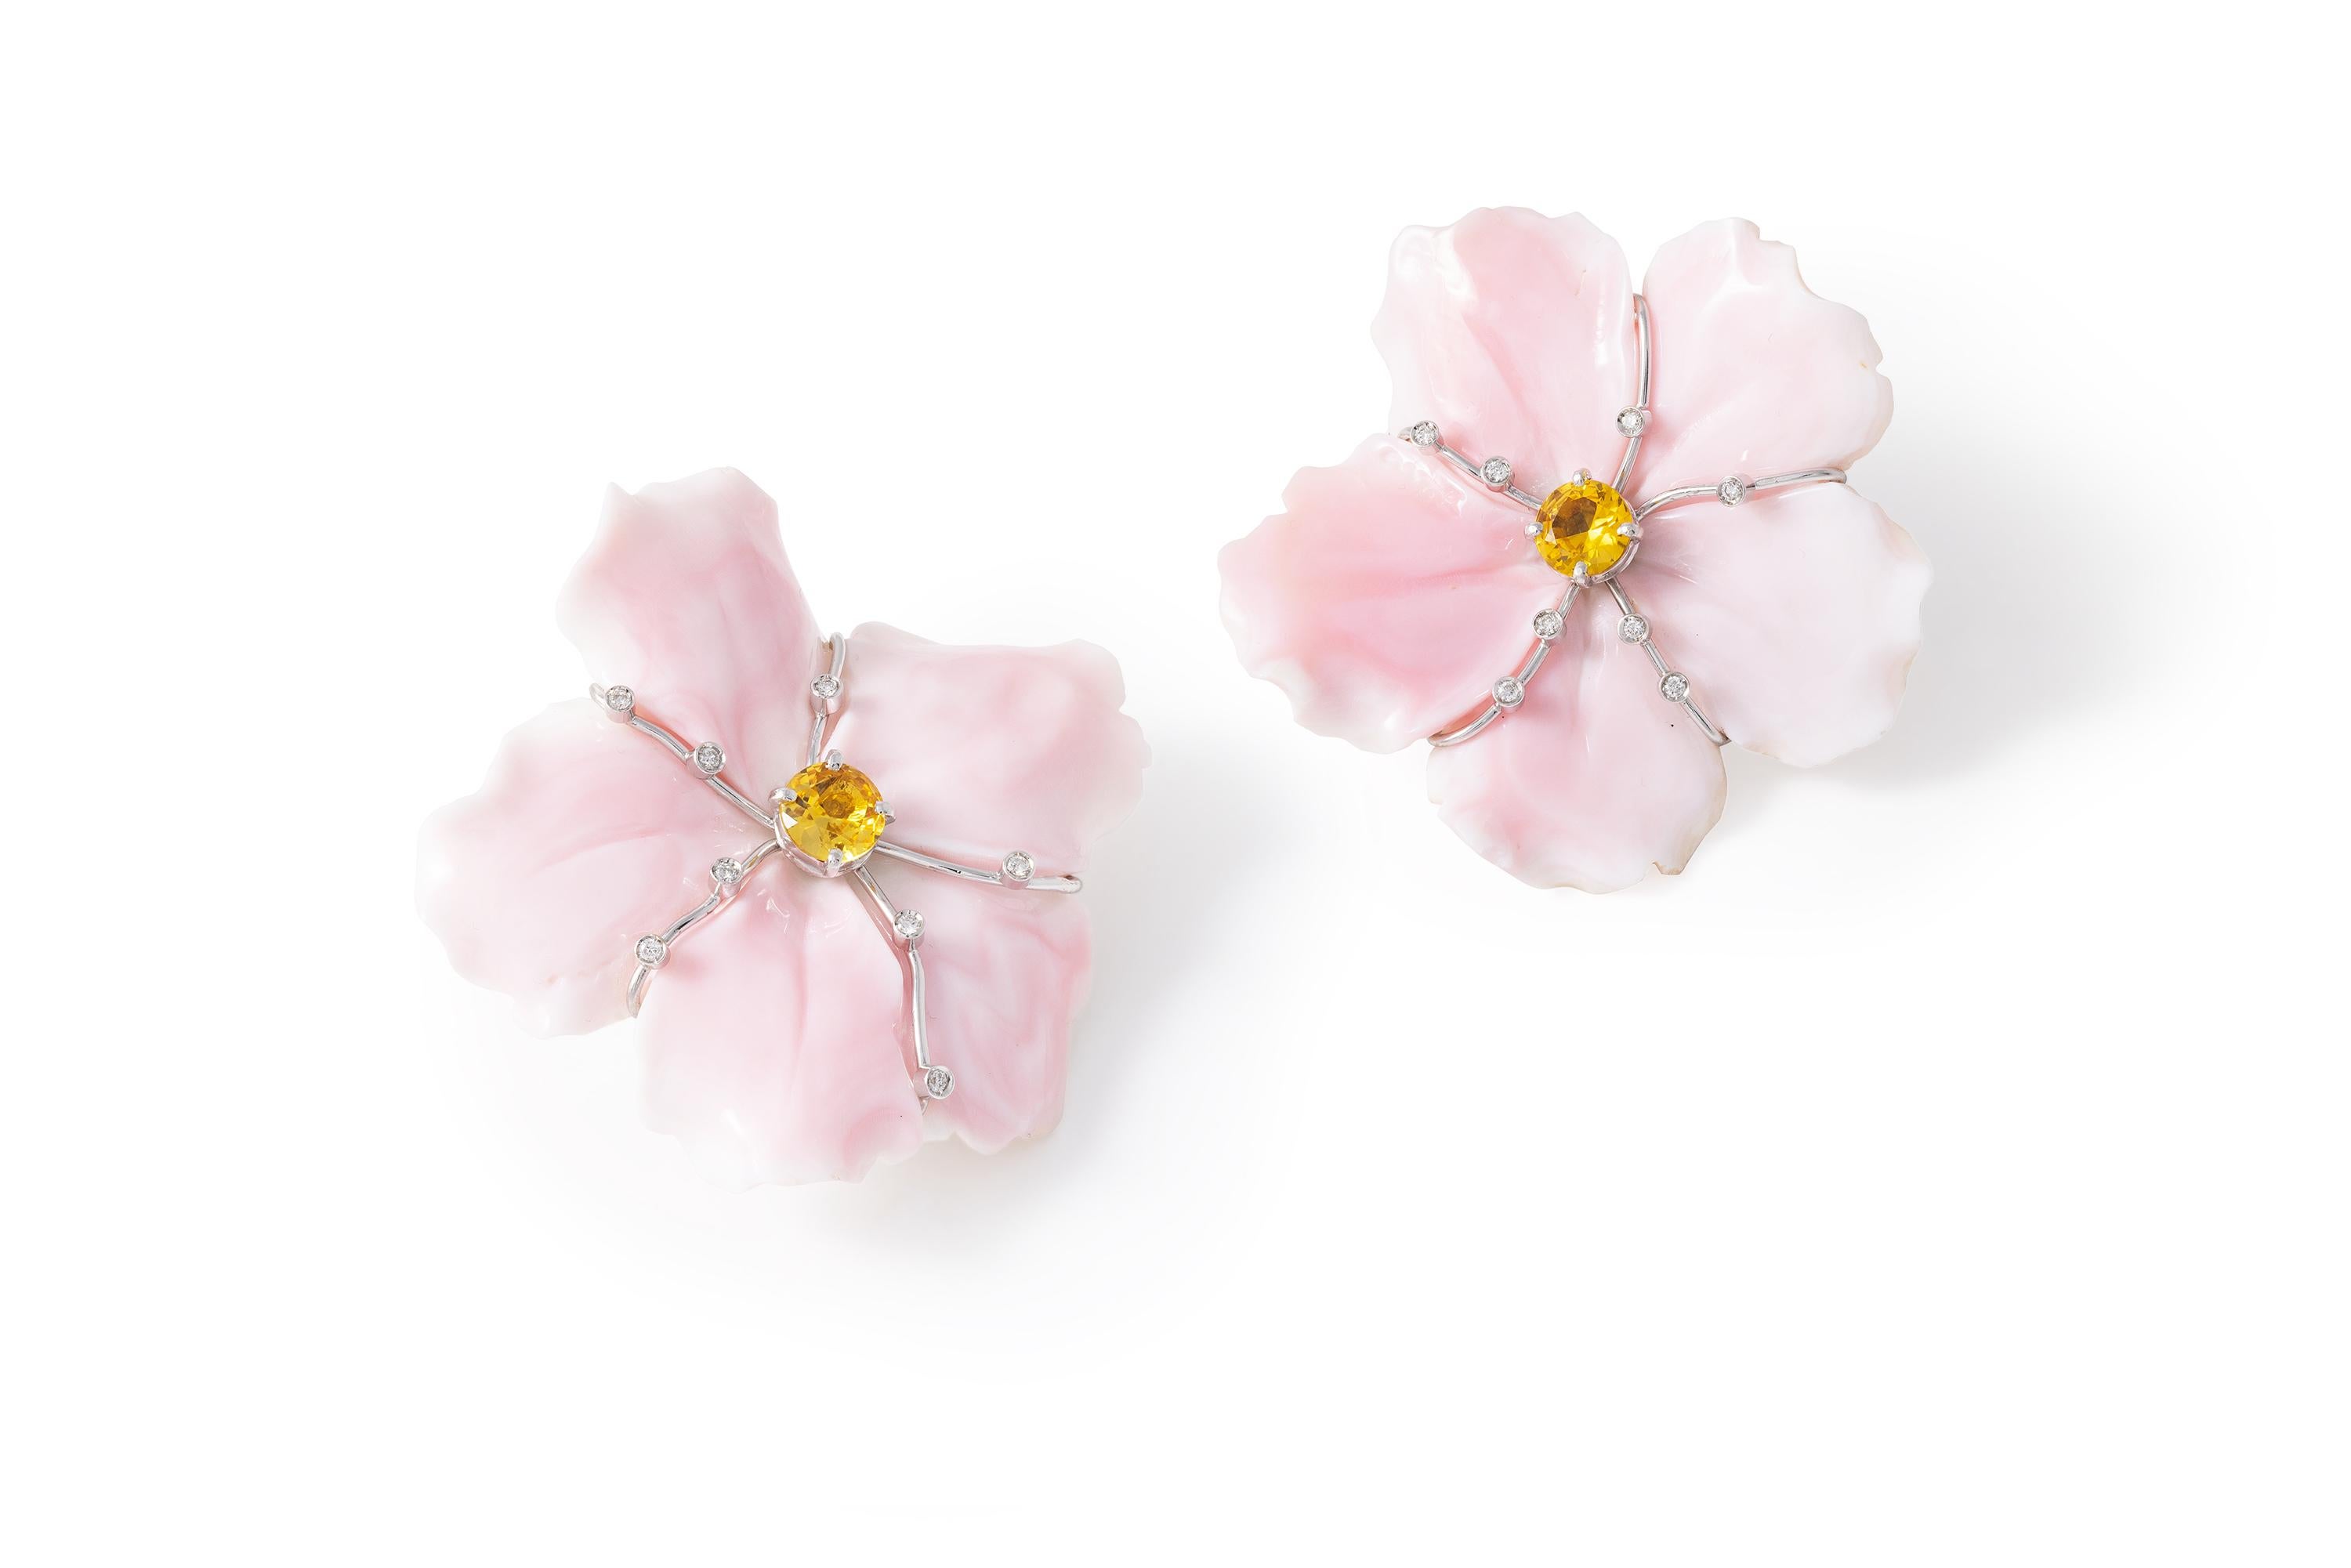 Brilliant Cut Regina Gambatesa Seashell Flower Earrings For Sale